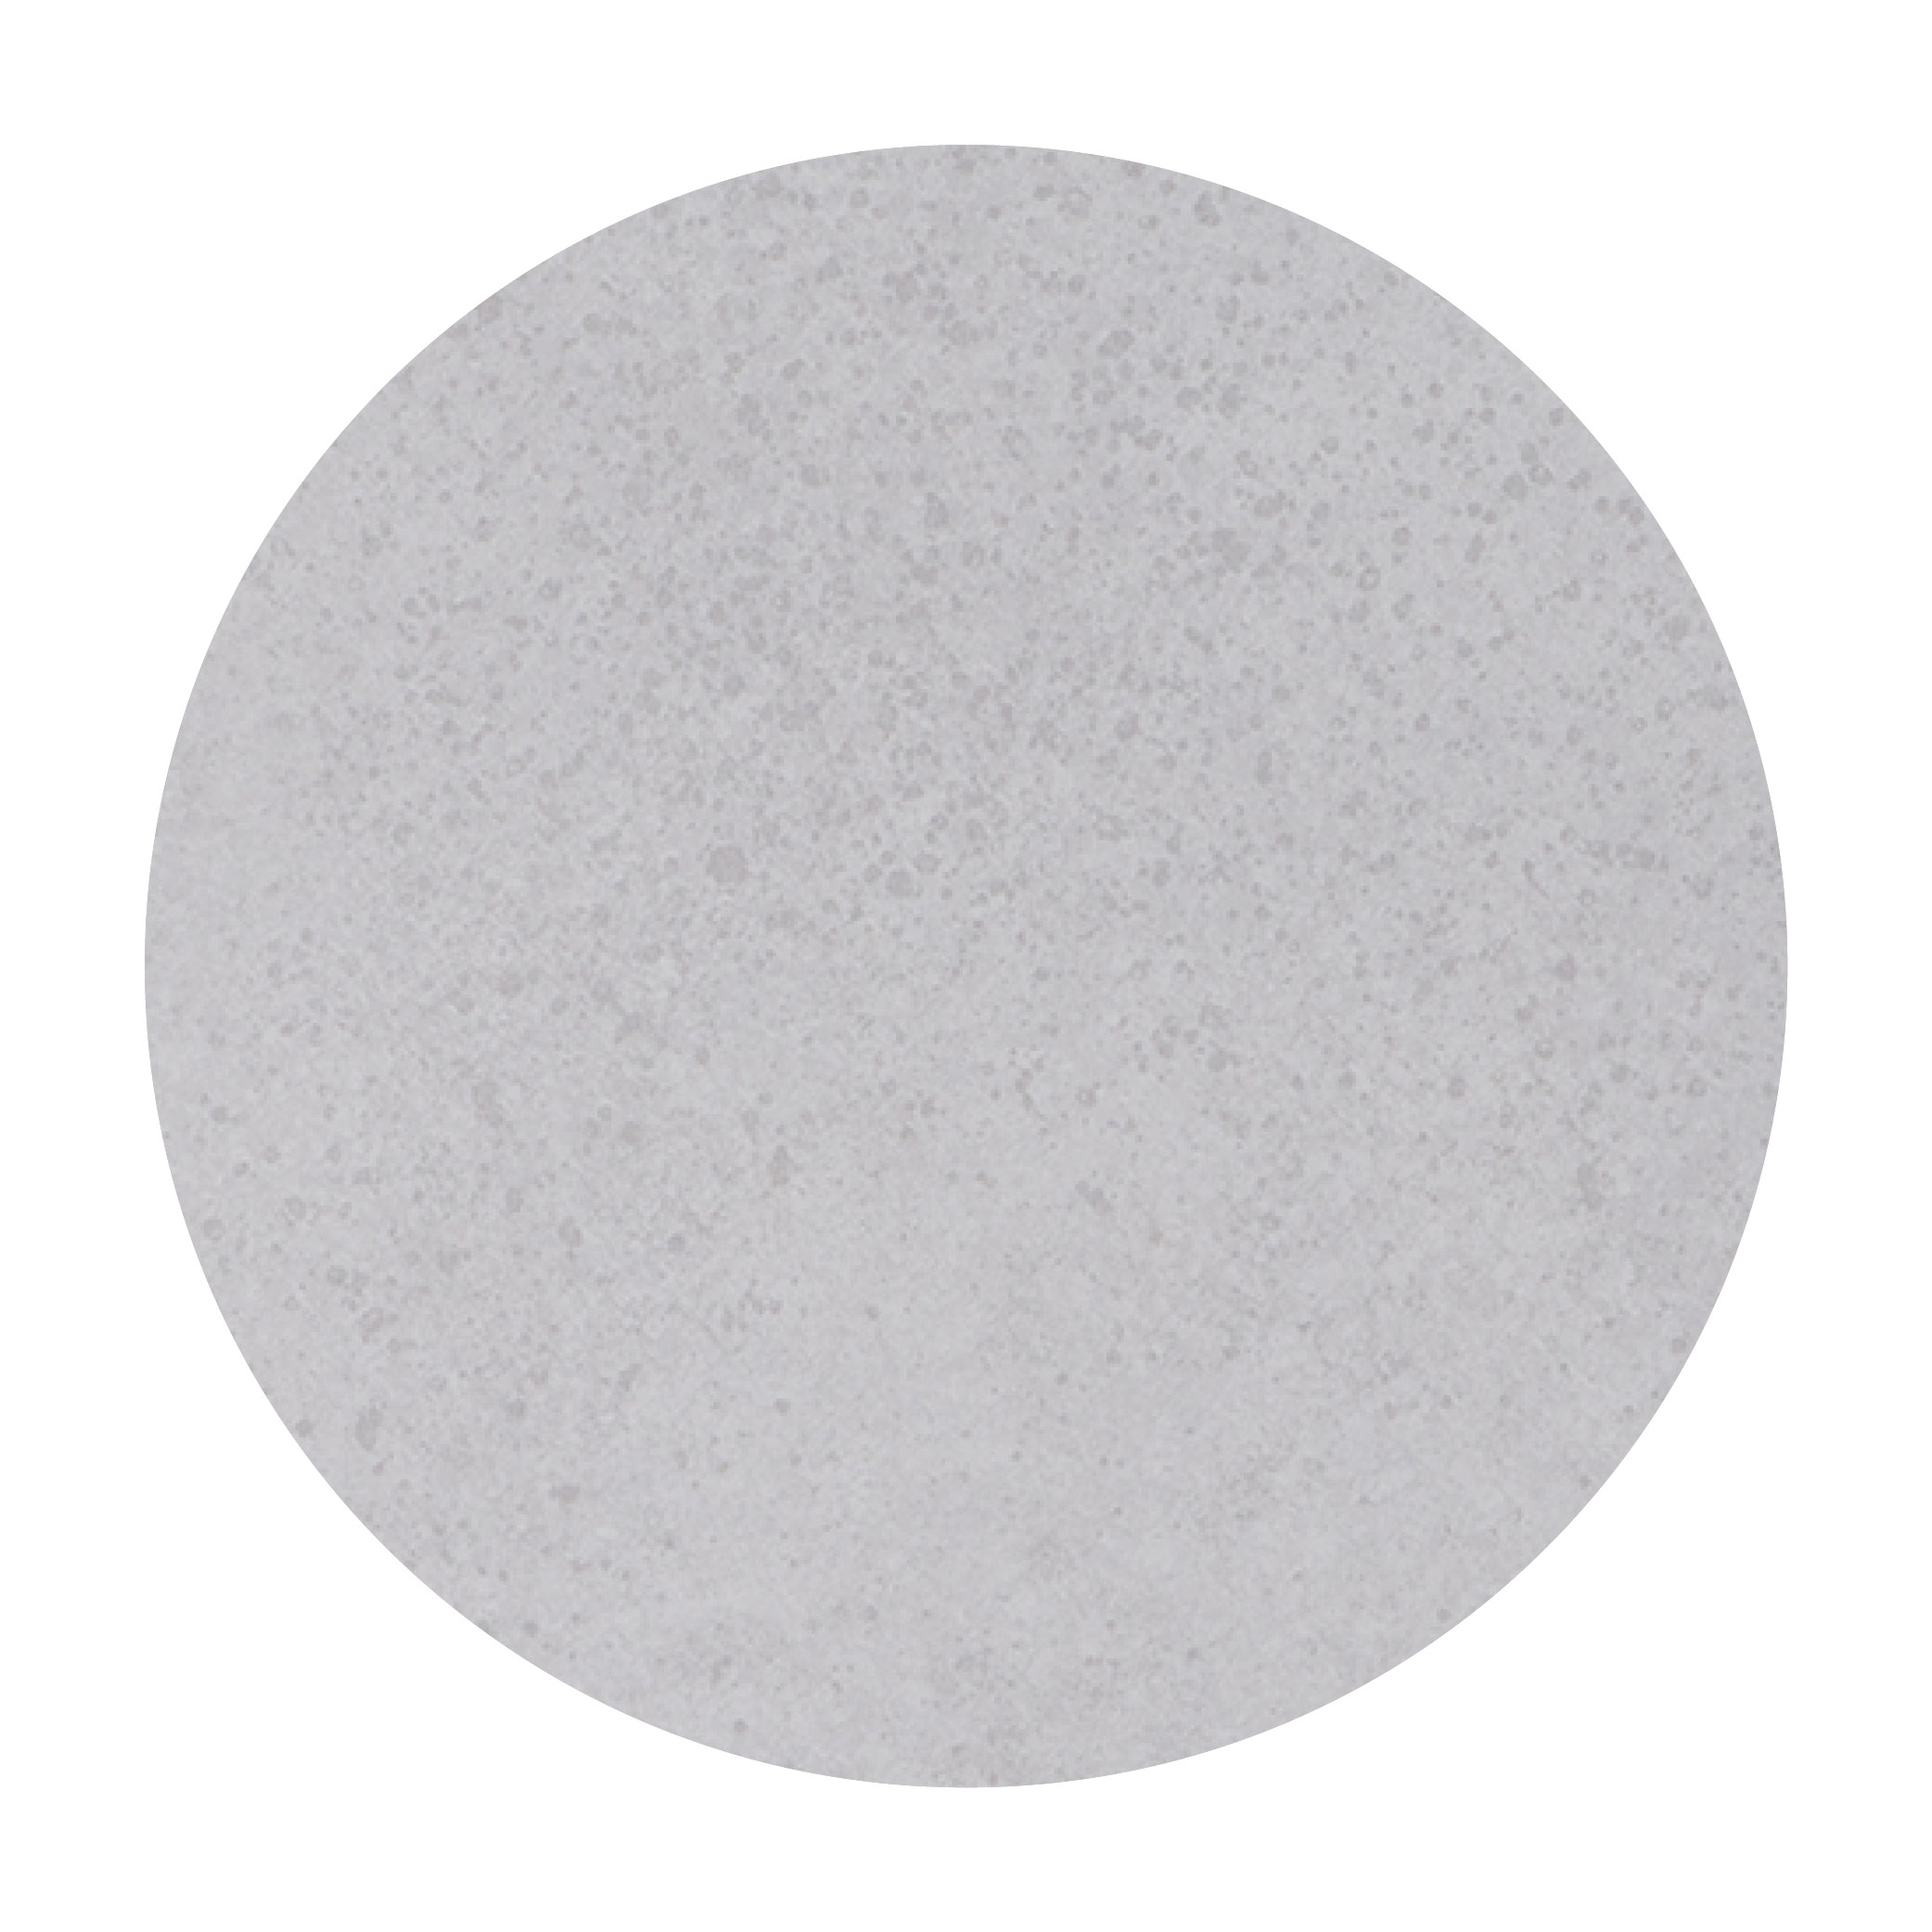 Image of U-Install-It Kitchens laminate benchtop colour White Diamond High gloss